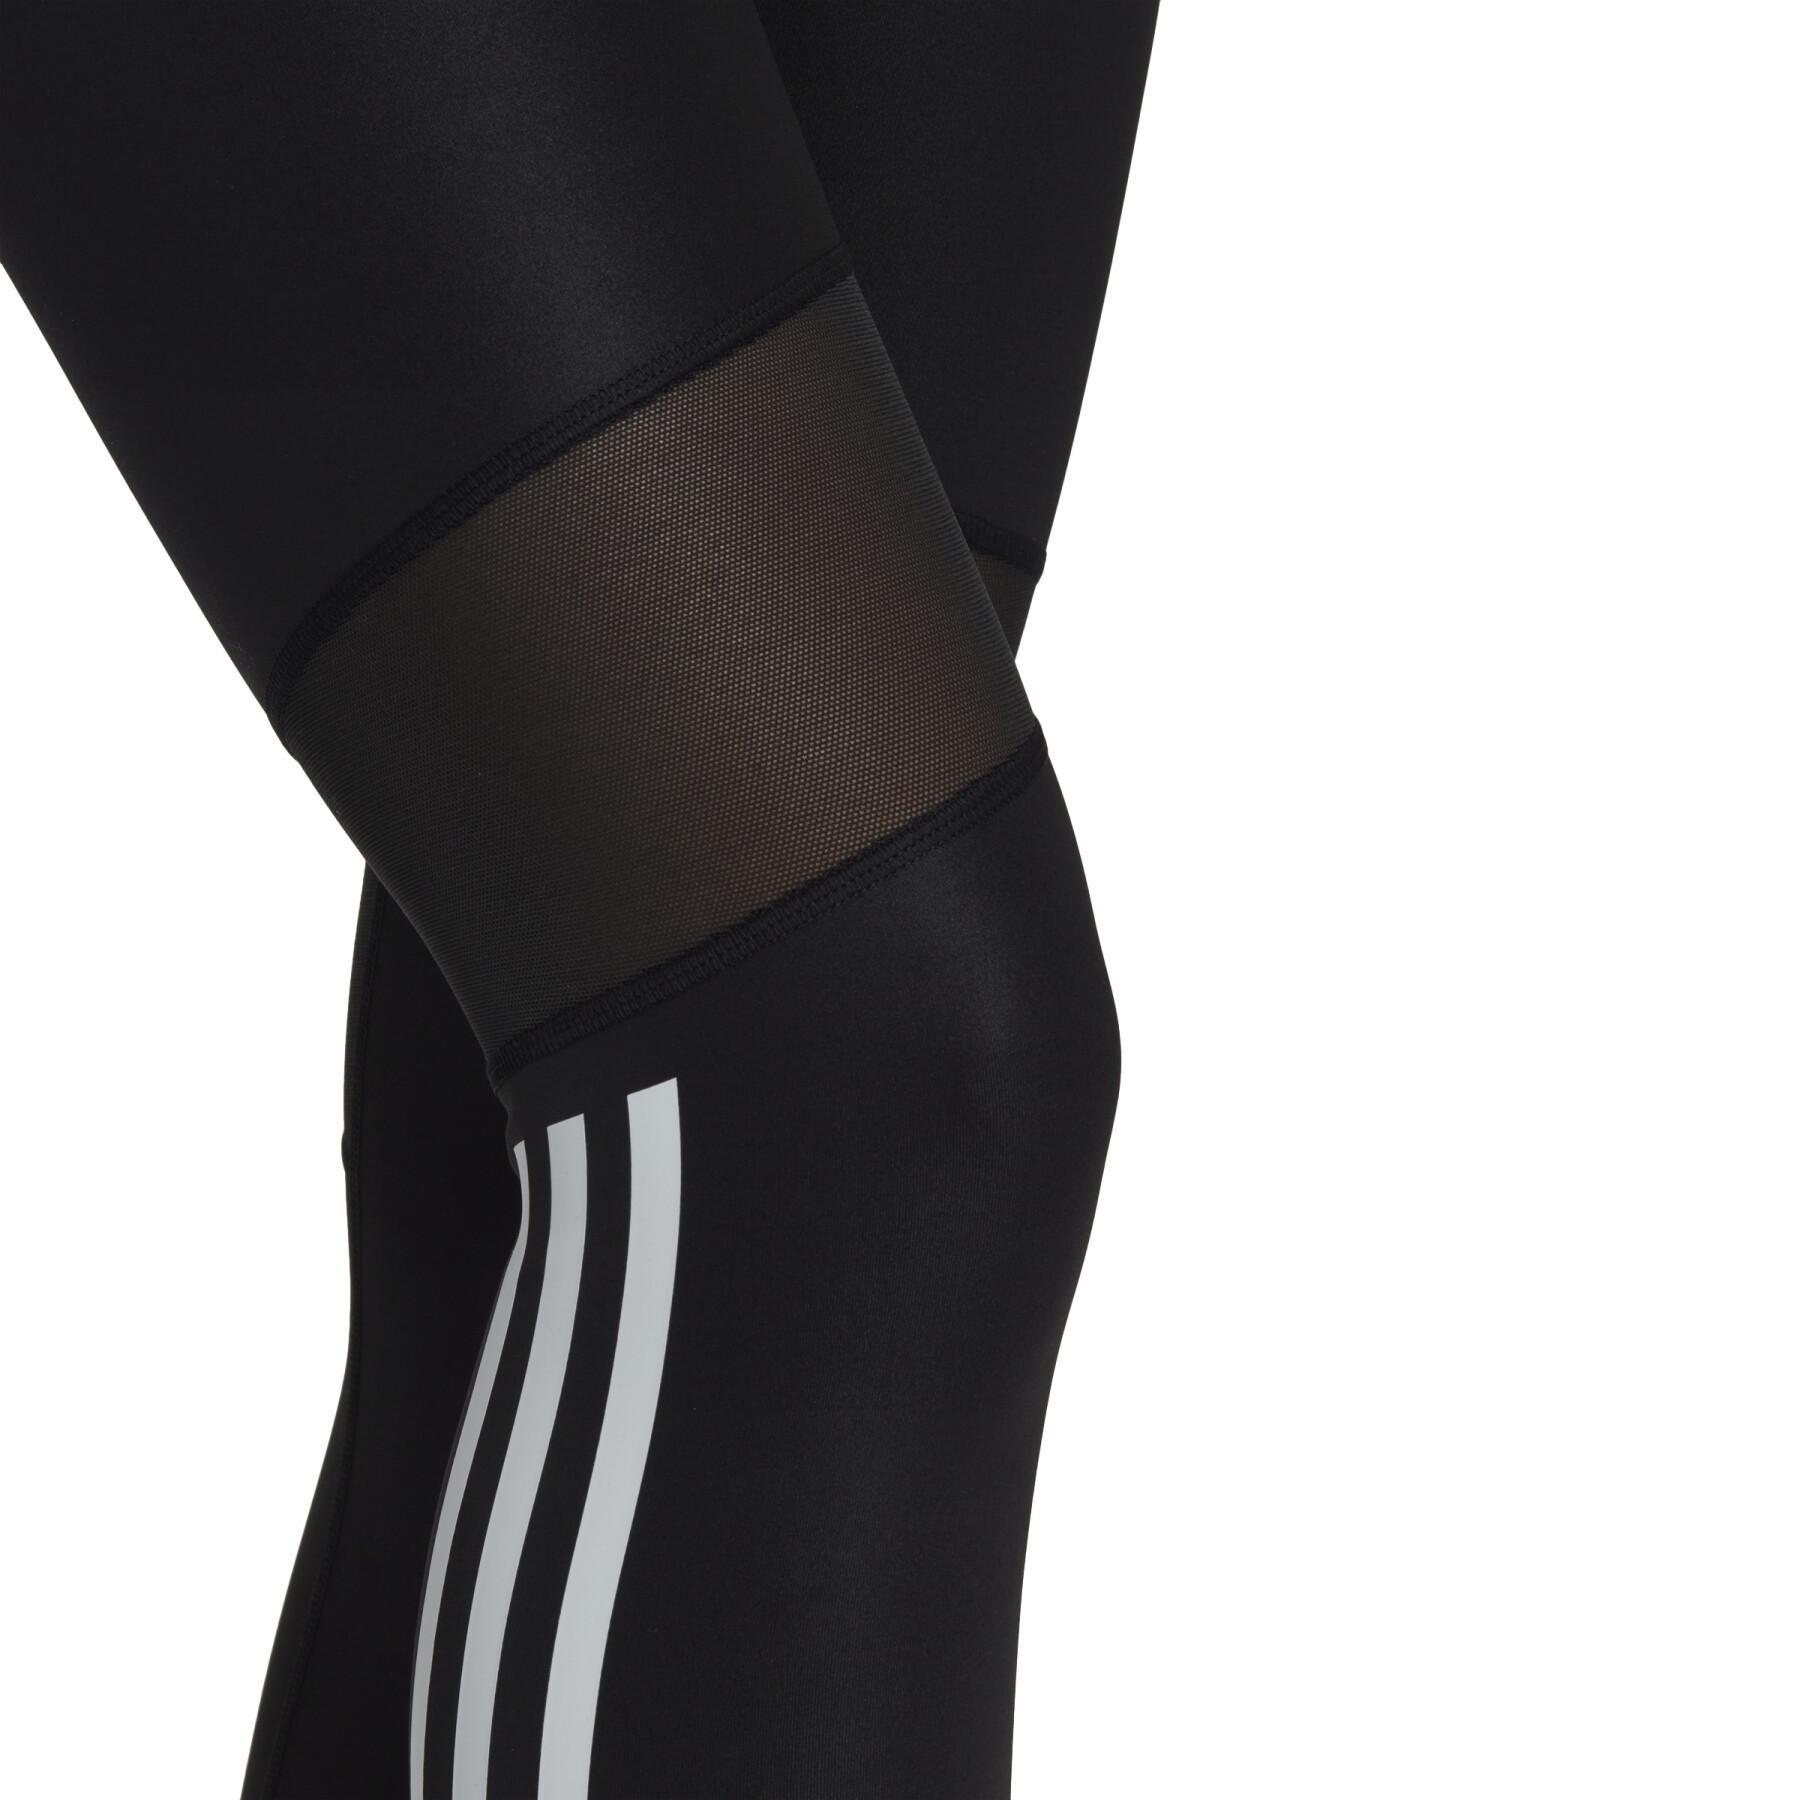 Legging 7/8 3 bands woman adidas Hyperglam - Textile - Crossfit